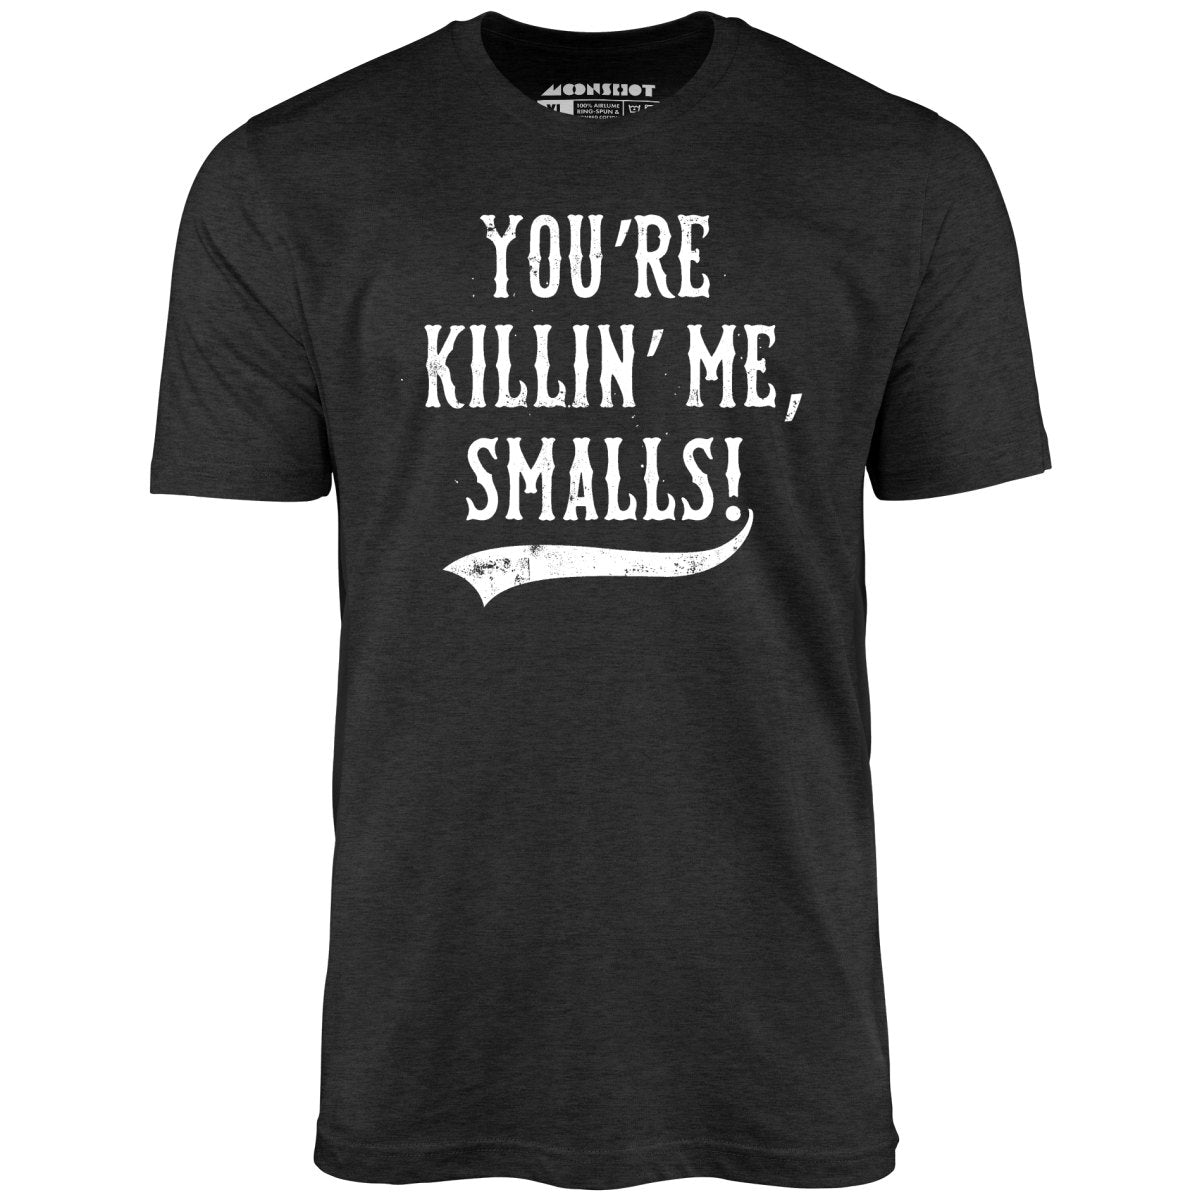 You're Killin' Me, Smalls! - Unisex T-Shirt